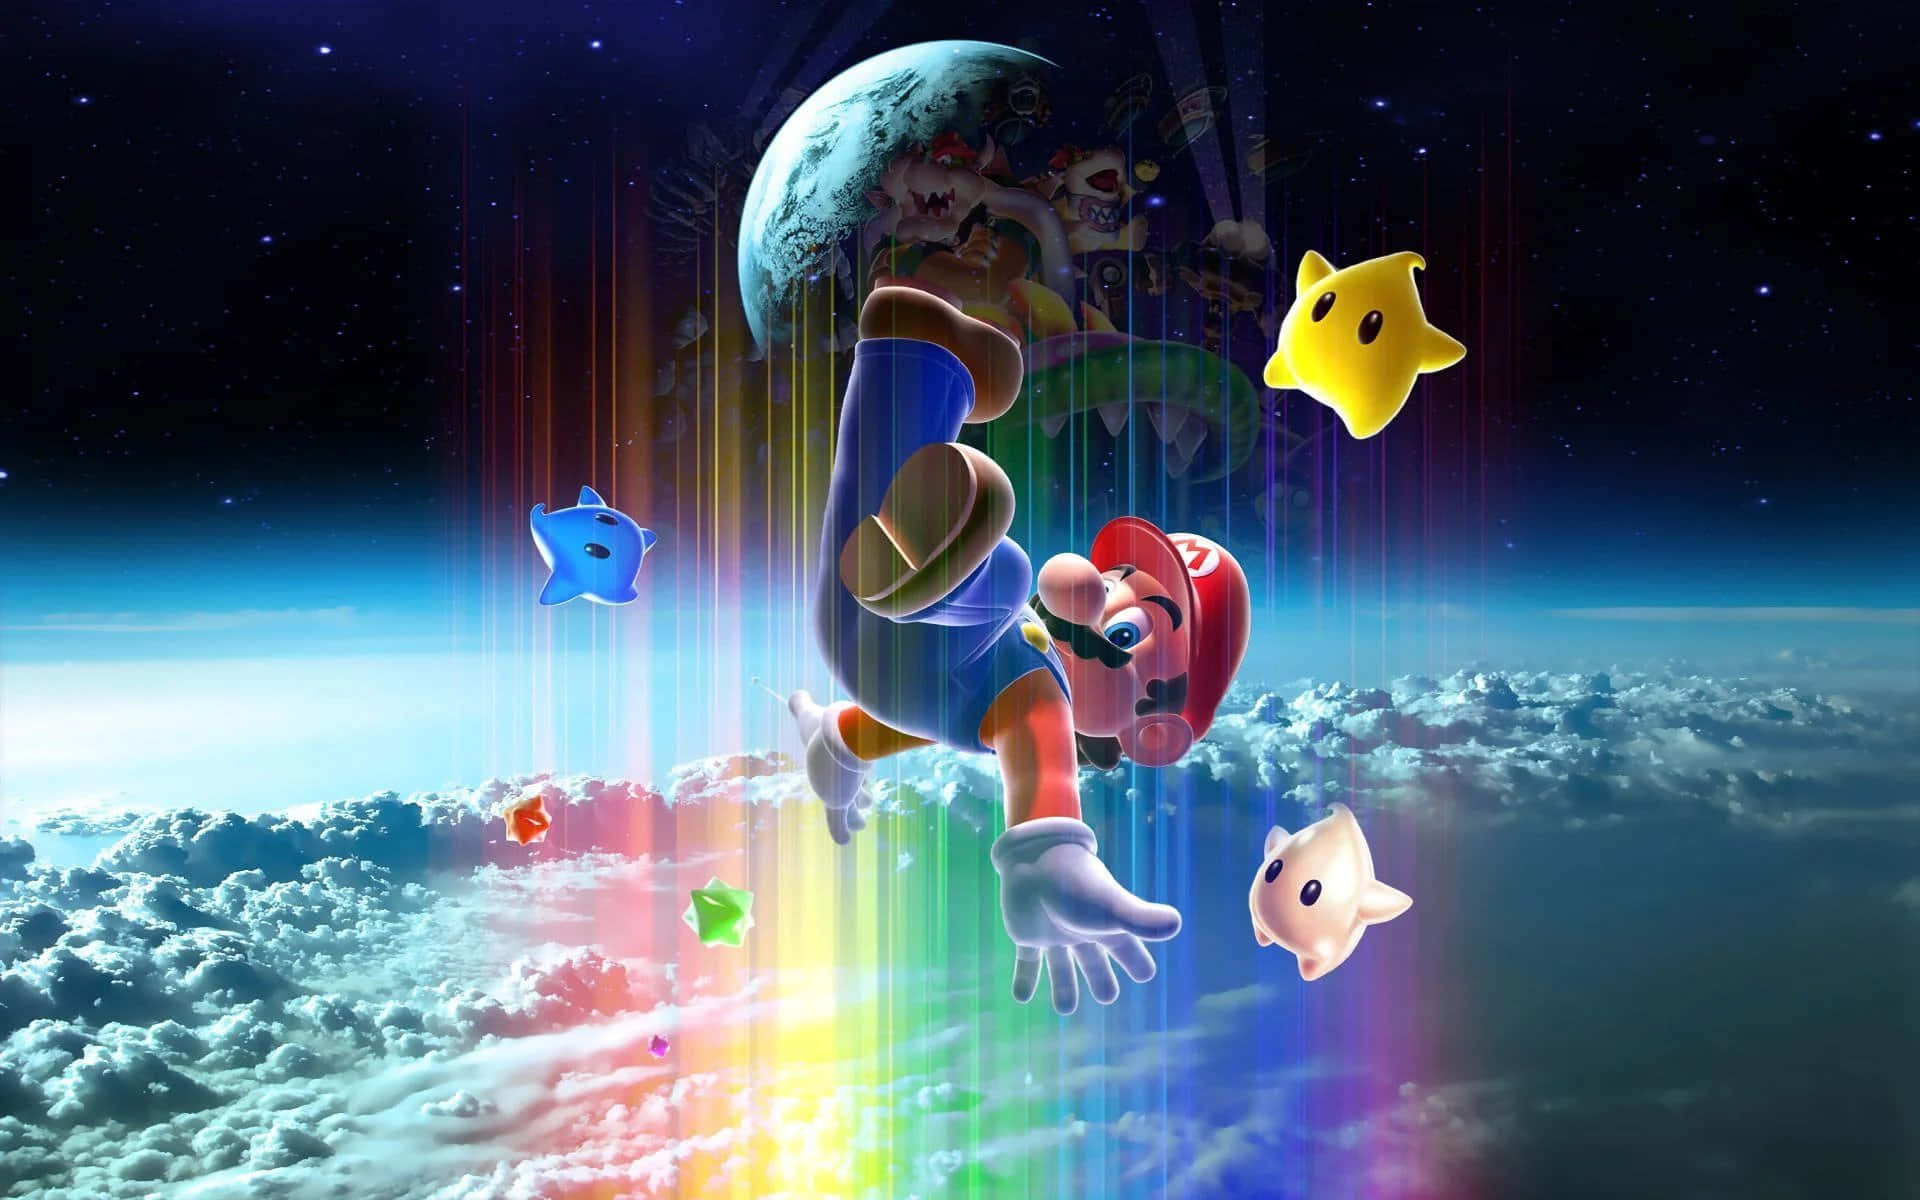 Mario running through the Mushroom Kingdom